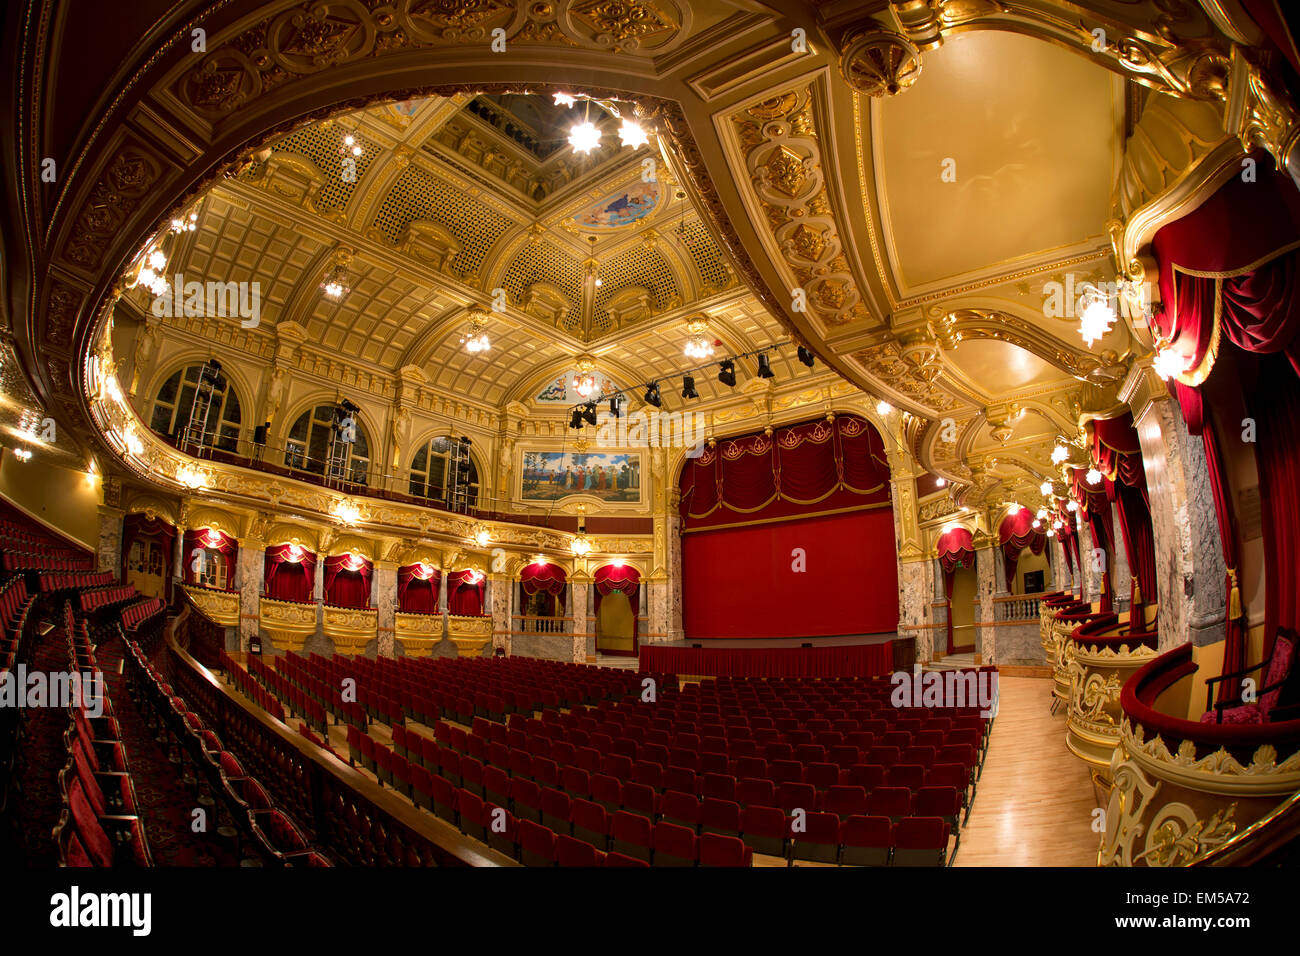 UK, England, Yorkshire, Harrogate at Christmas, Royal Hall ornate Edwardian theatre interior Stock Photo